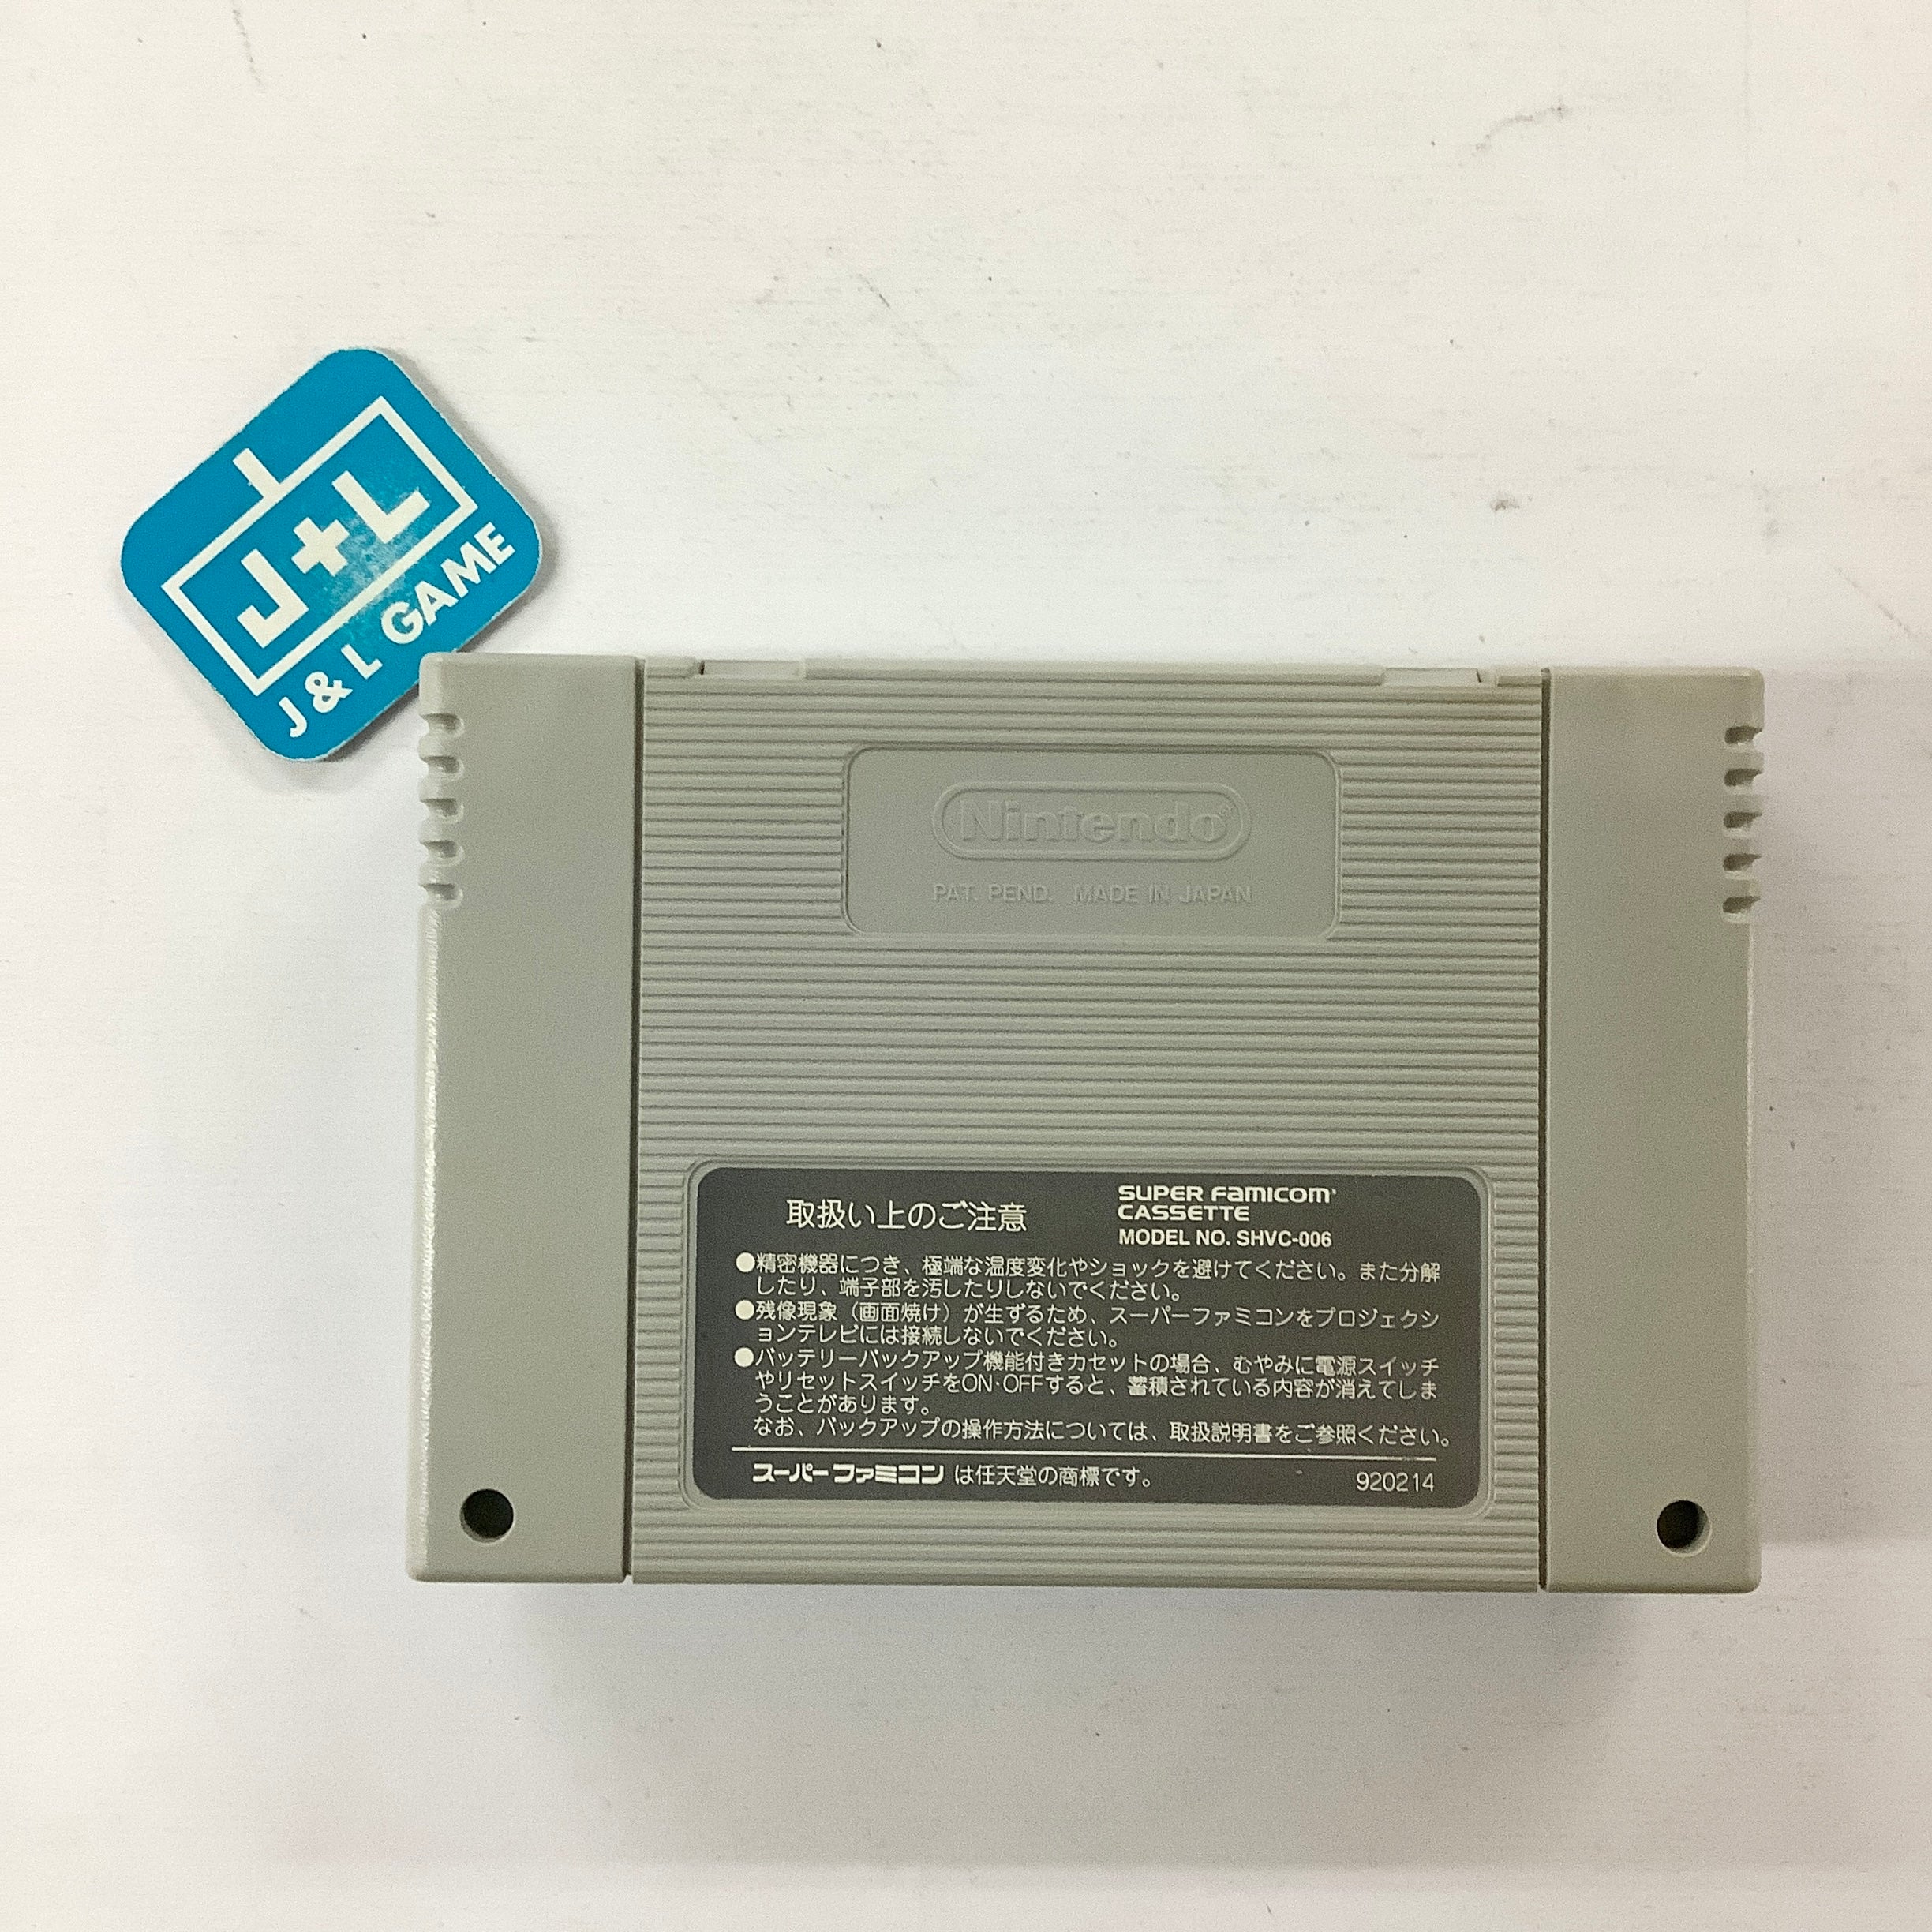 Battletech 3050 - (SFC) Super Famicom [Pre-Owned] (Japanese Import) Video Games ASK   